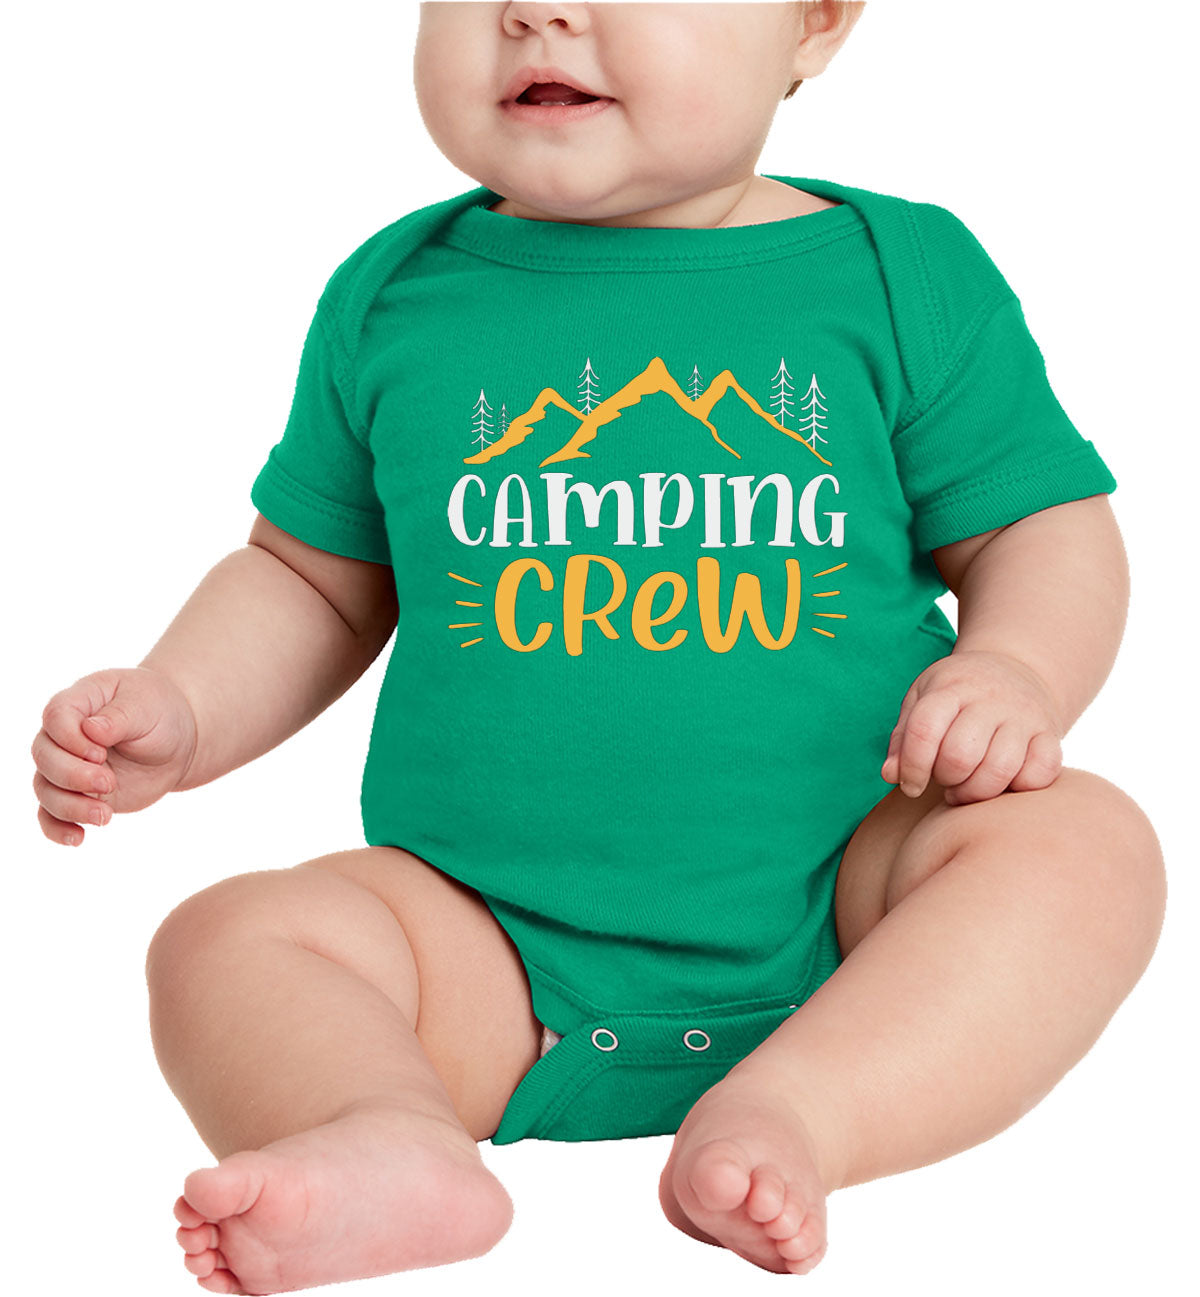 Camping Crew Baby Onesie